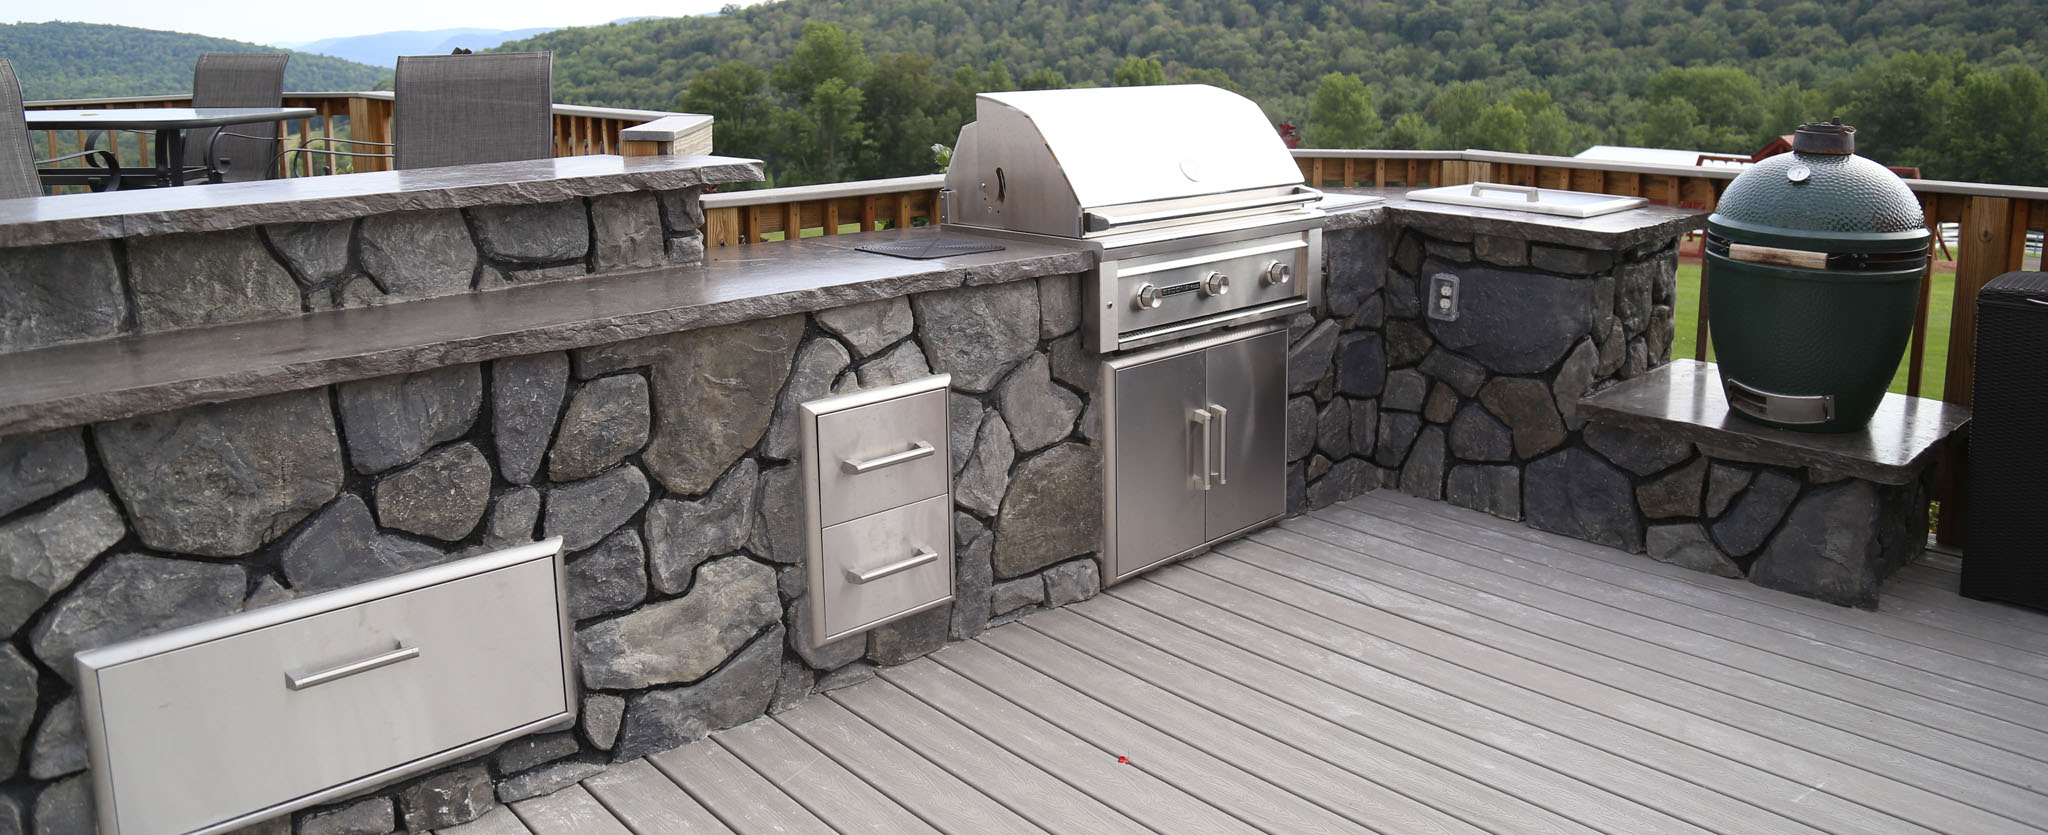 masonry stone deck top outdoor kitchen